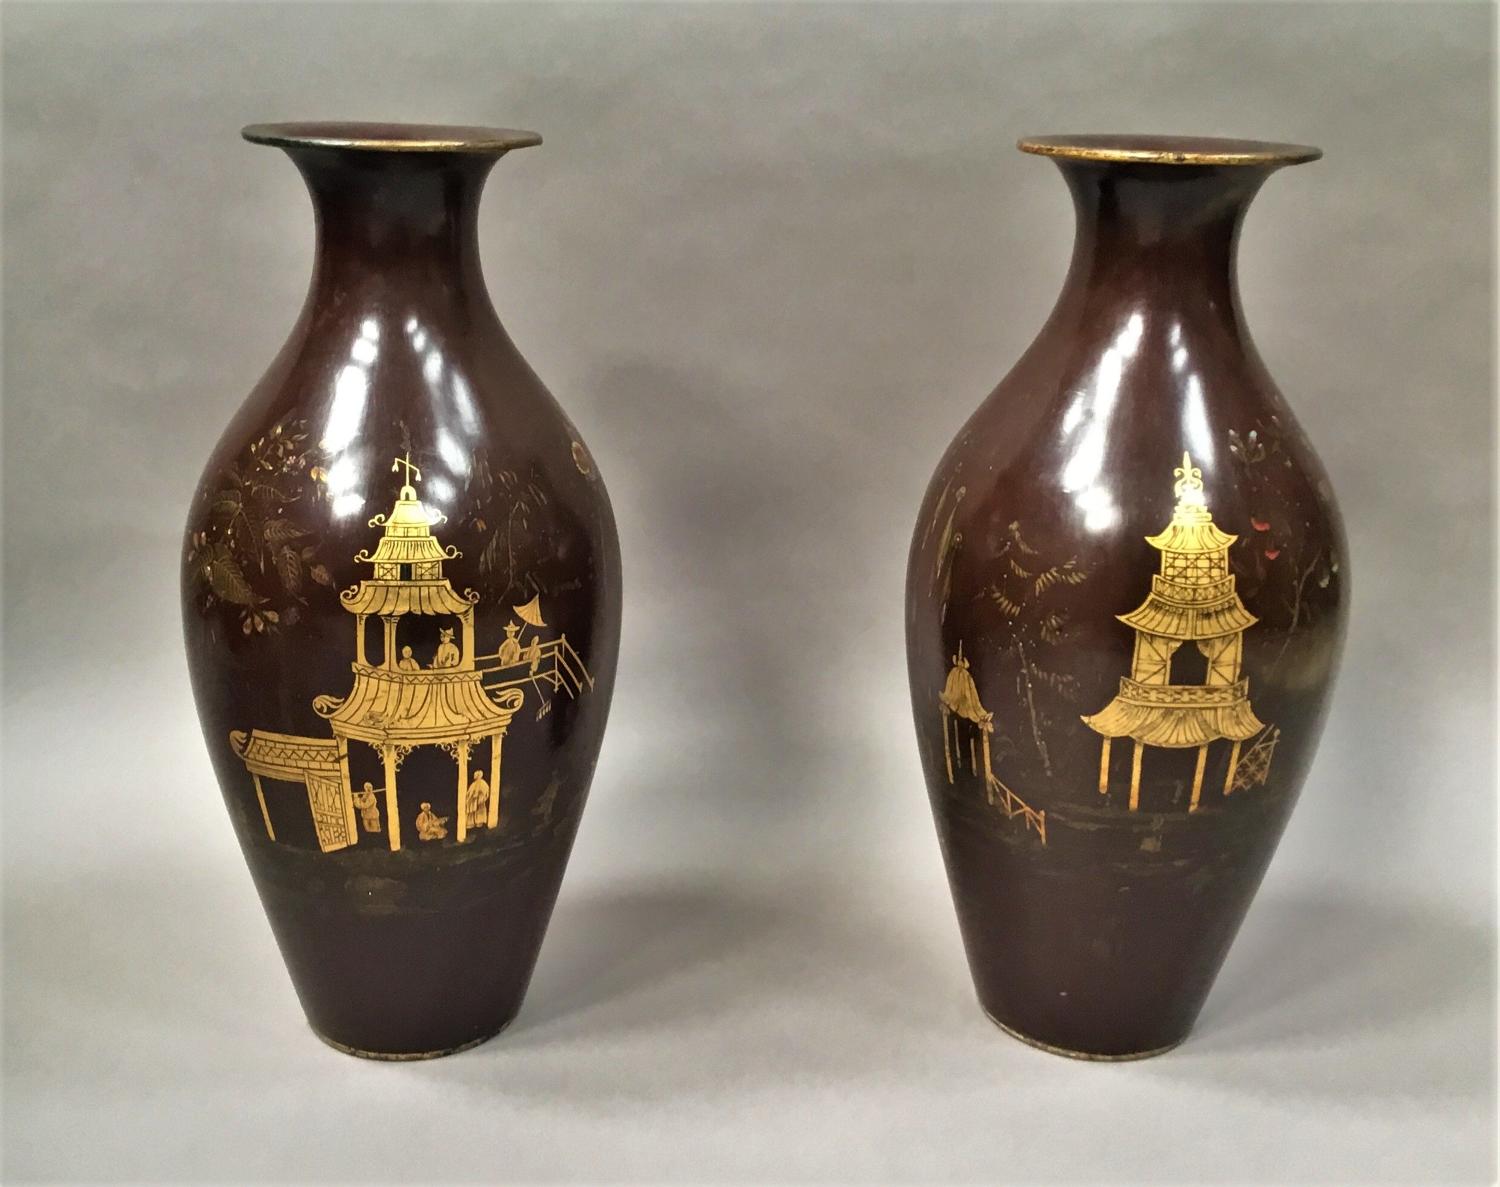 C19th pair of lacquered papier mache vases by Jennens & Bettridge